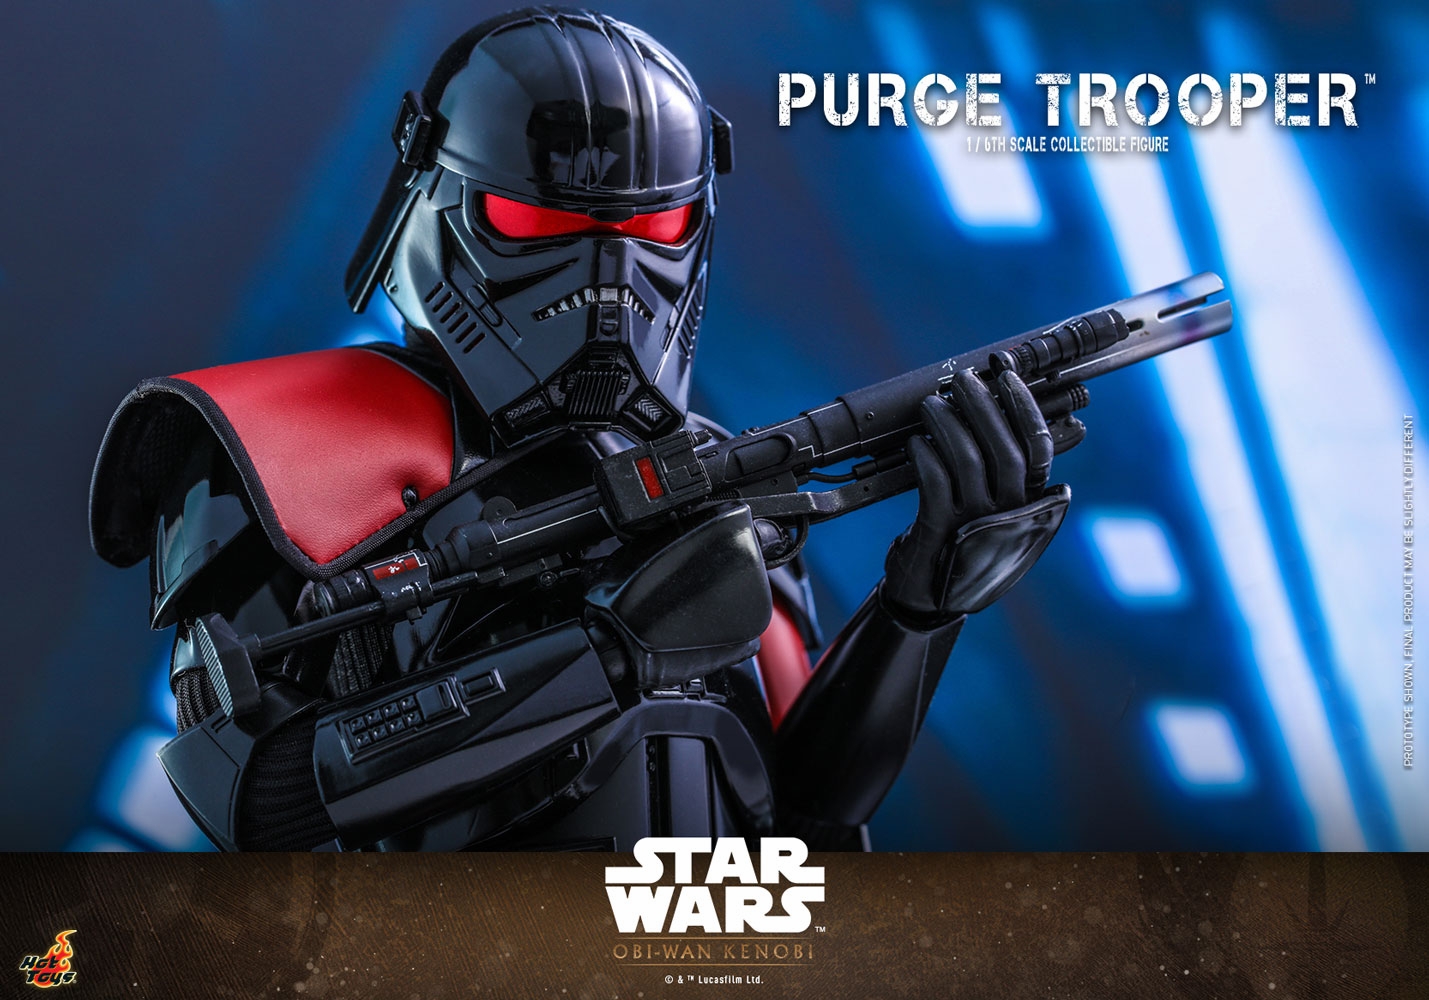 purge-trooper_star-wars_gallery_62bdd4f1e3bd1.jpg